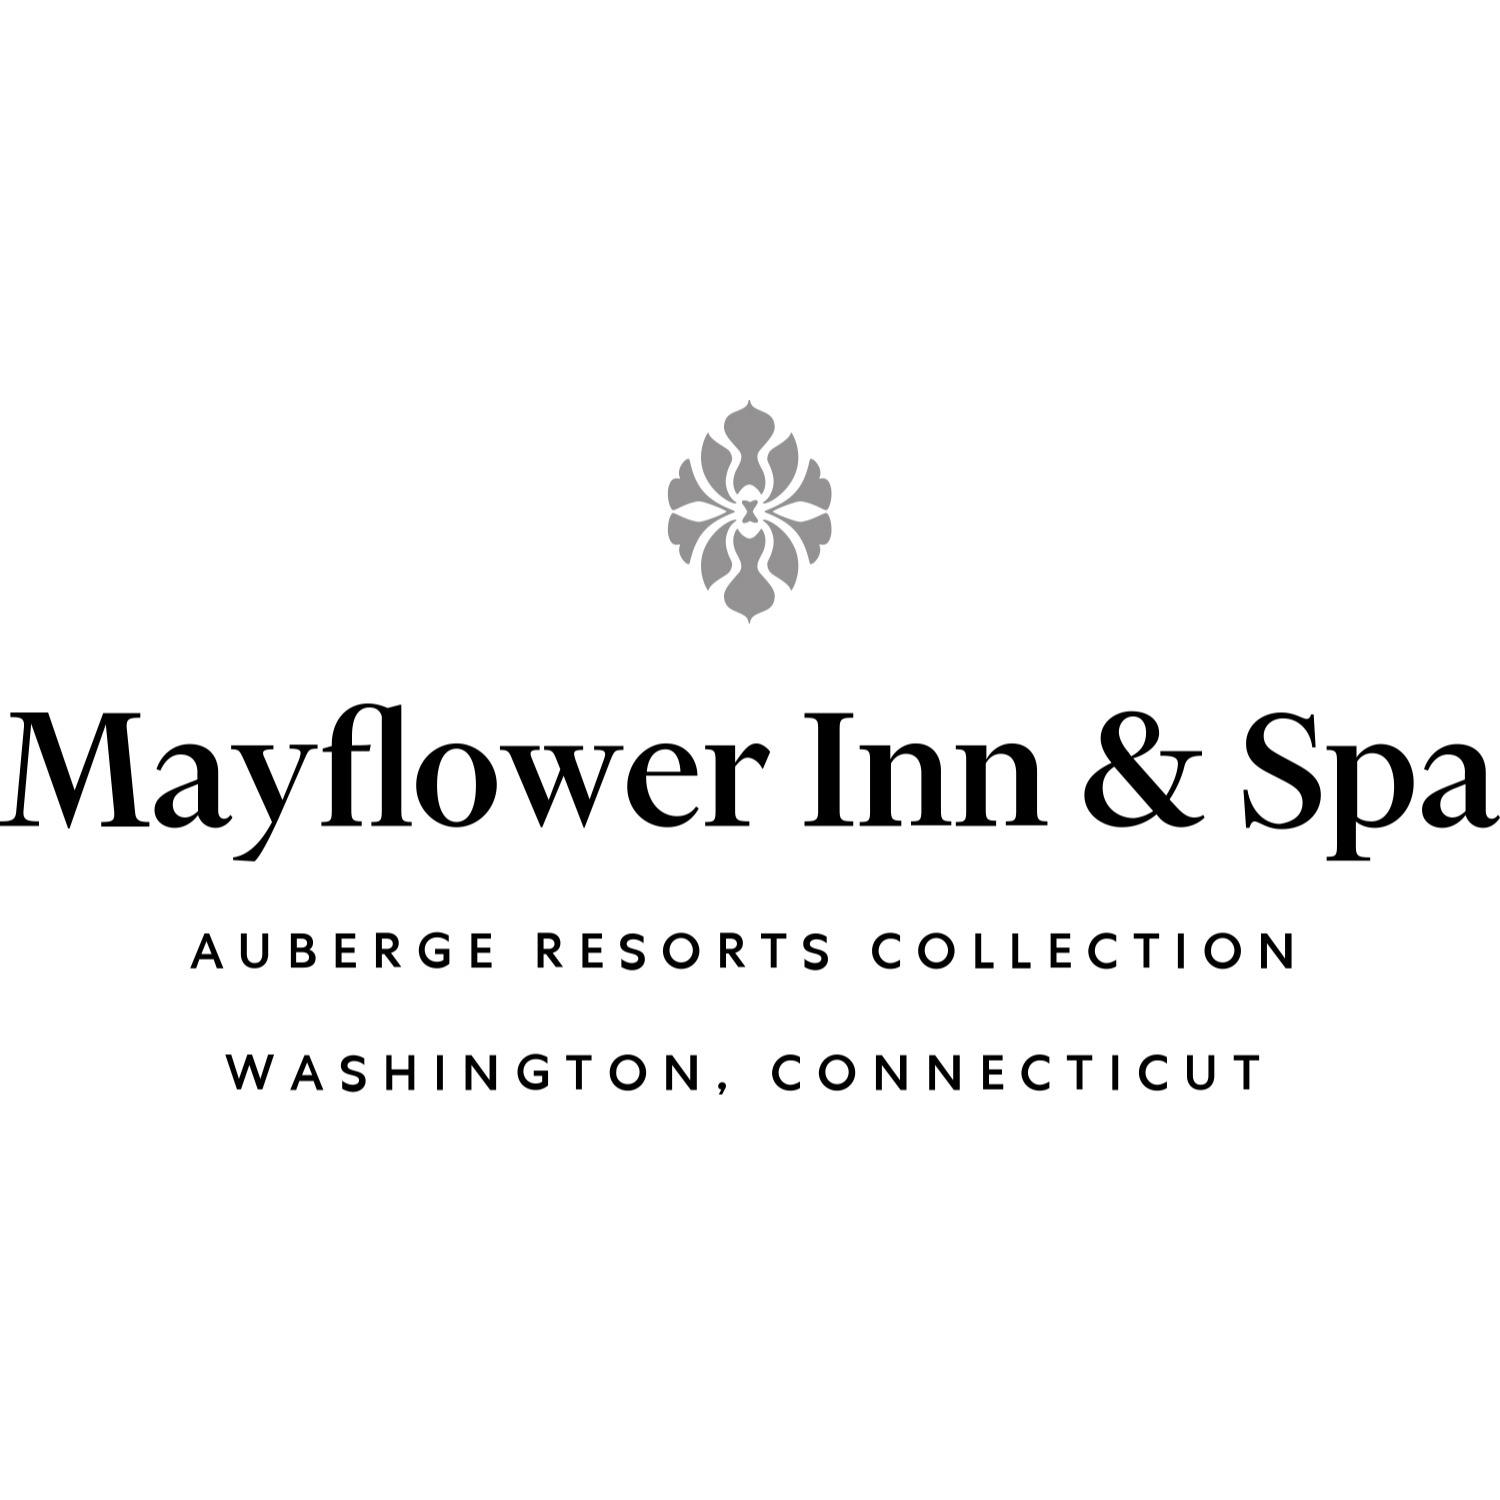 Mayflower Inn & Spa, Auberge Resorts Collection